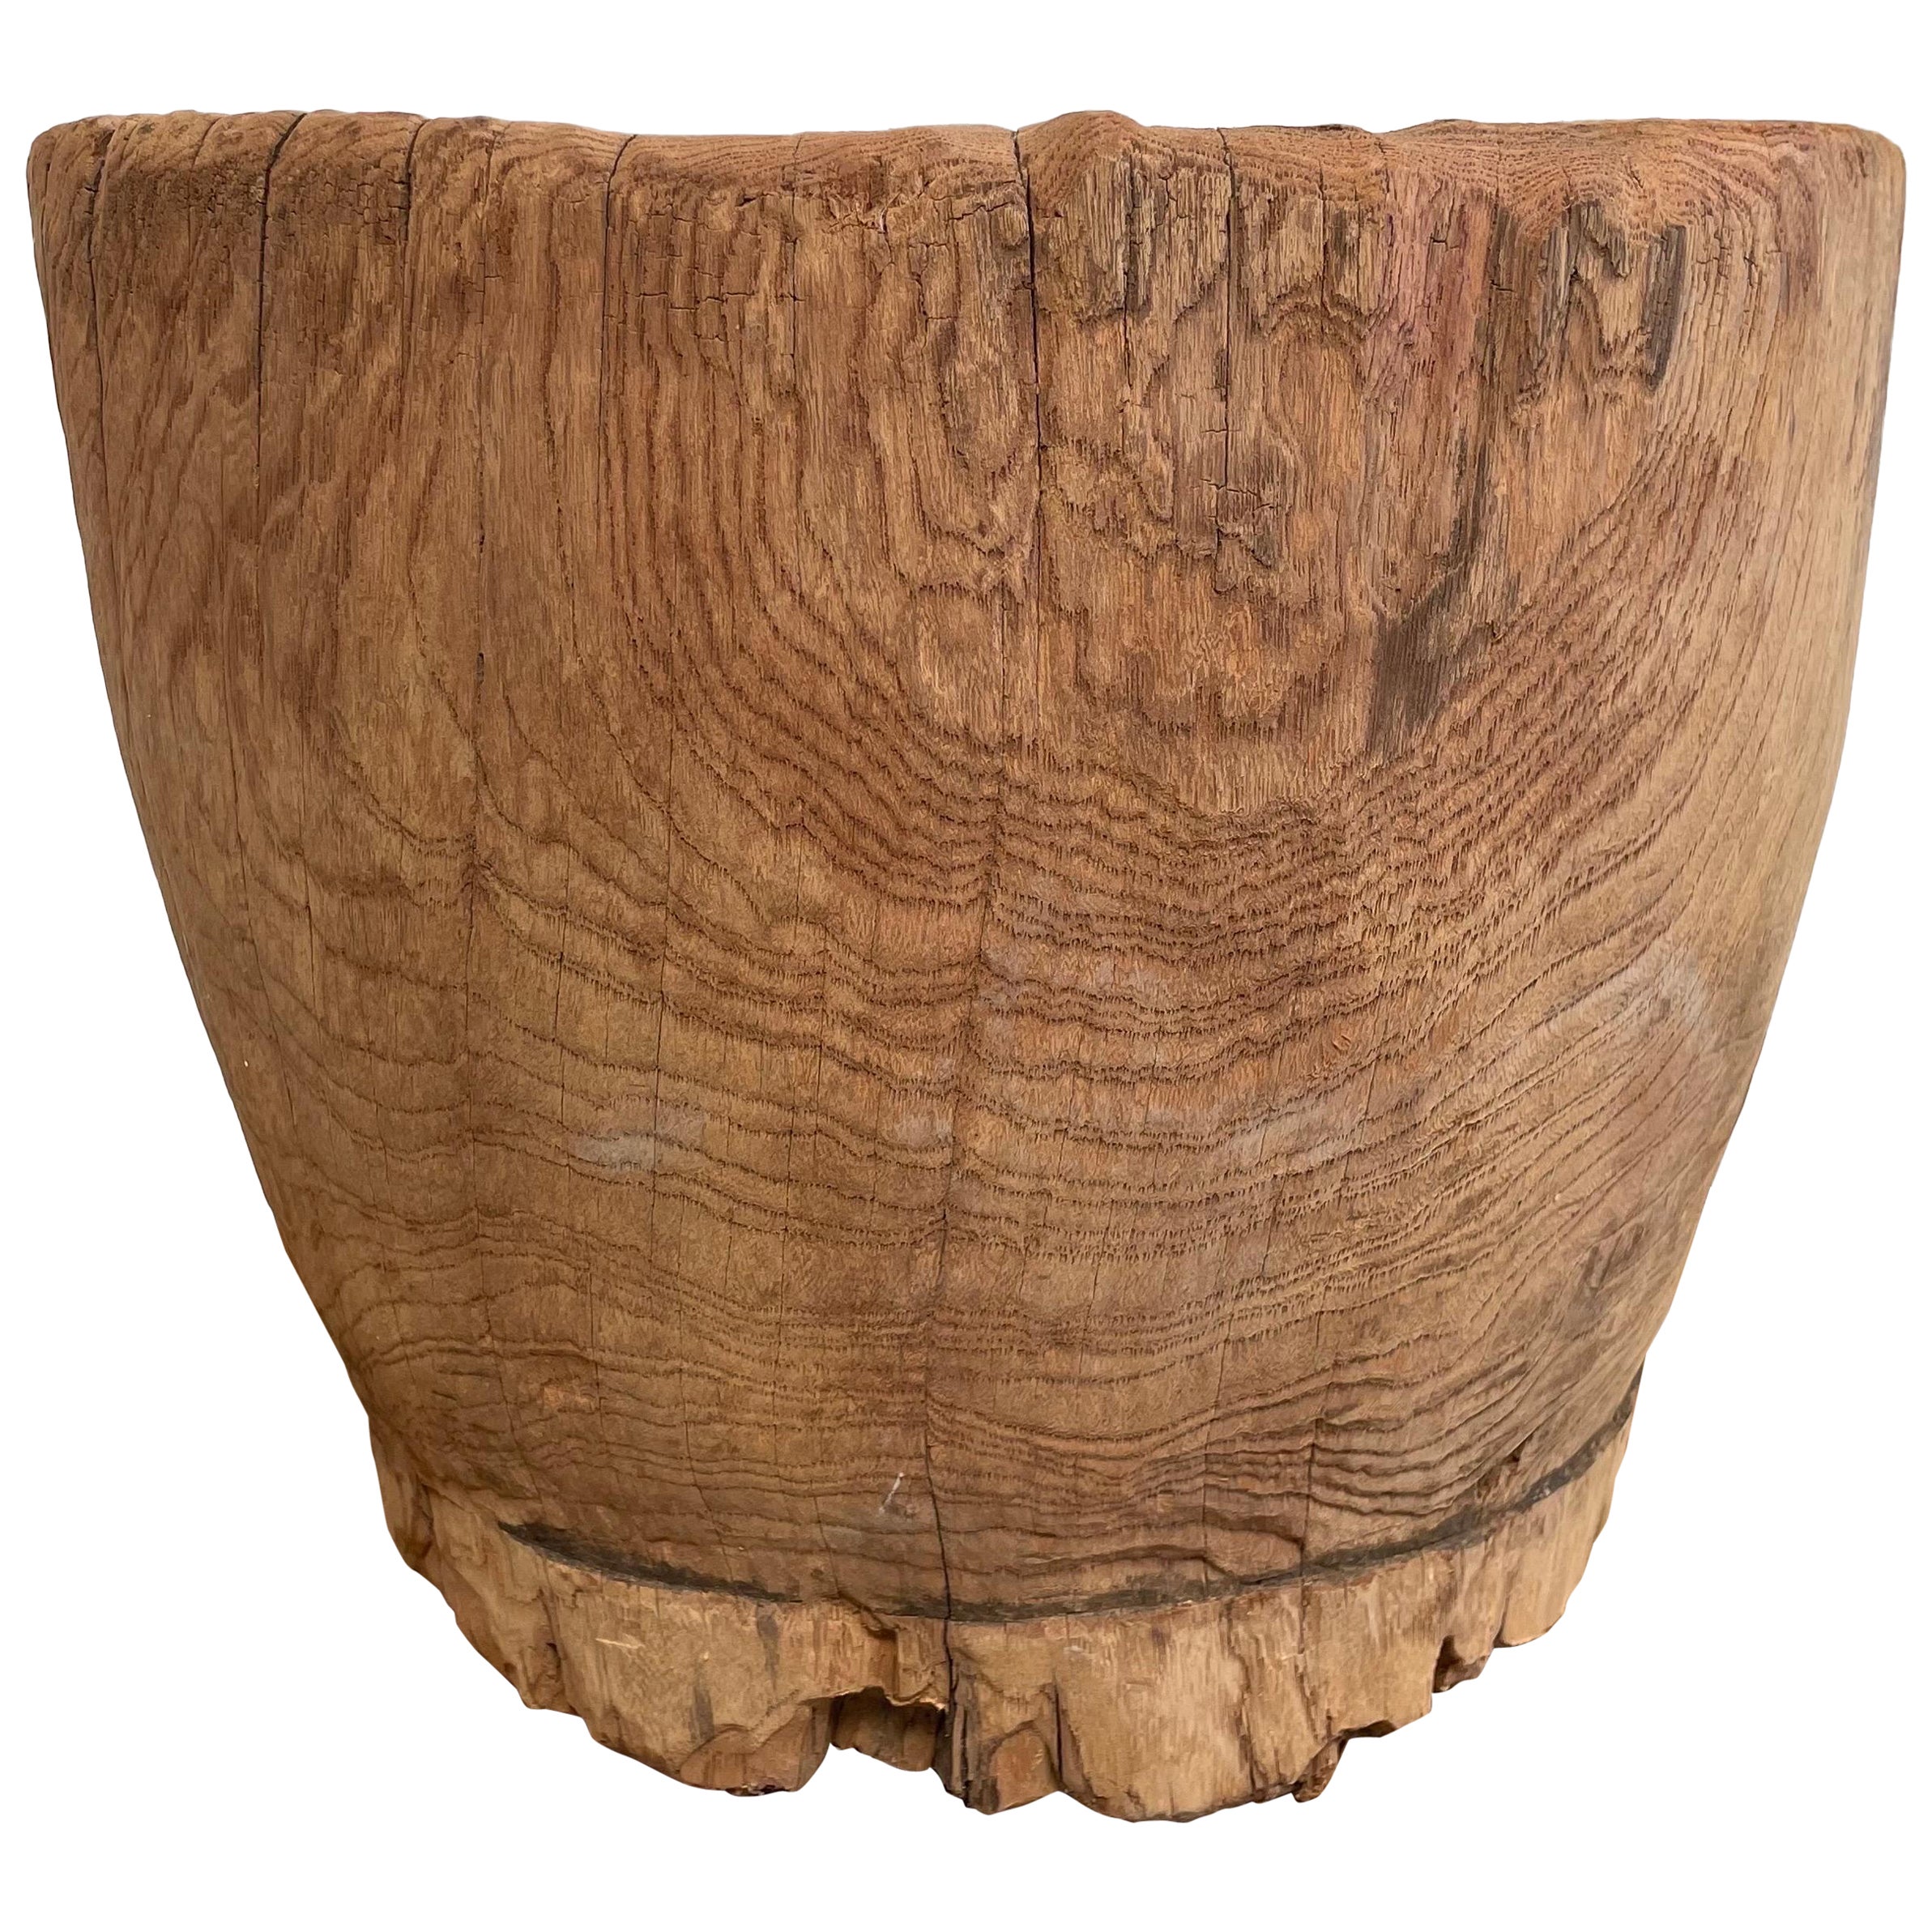 Decorative Wood Stump Bowl For Sale